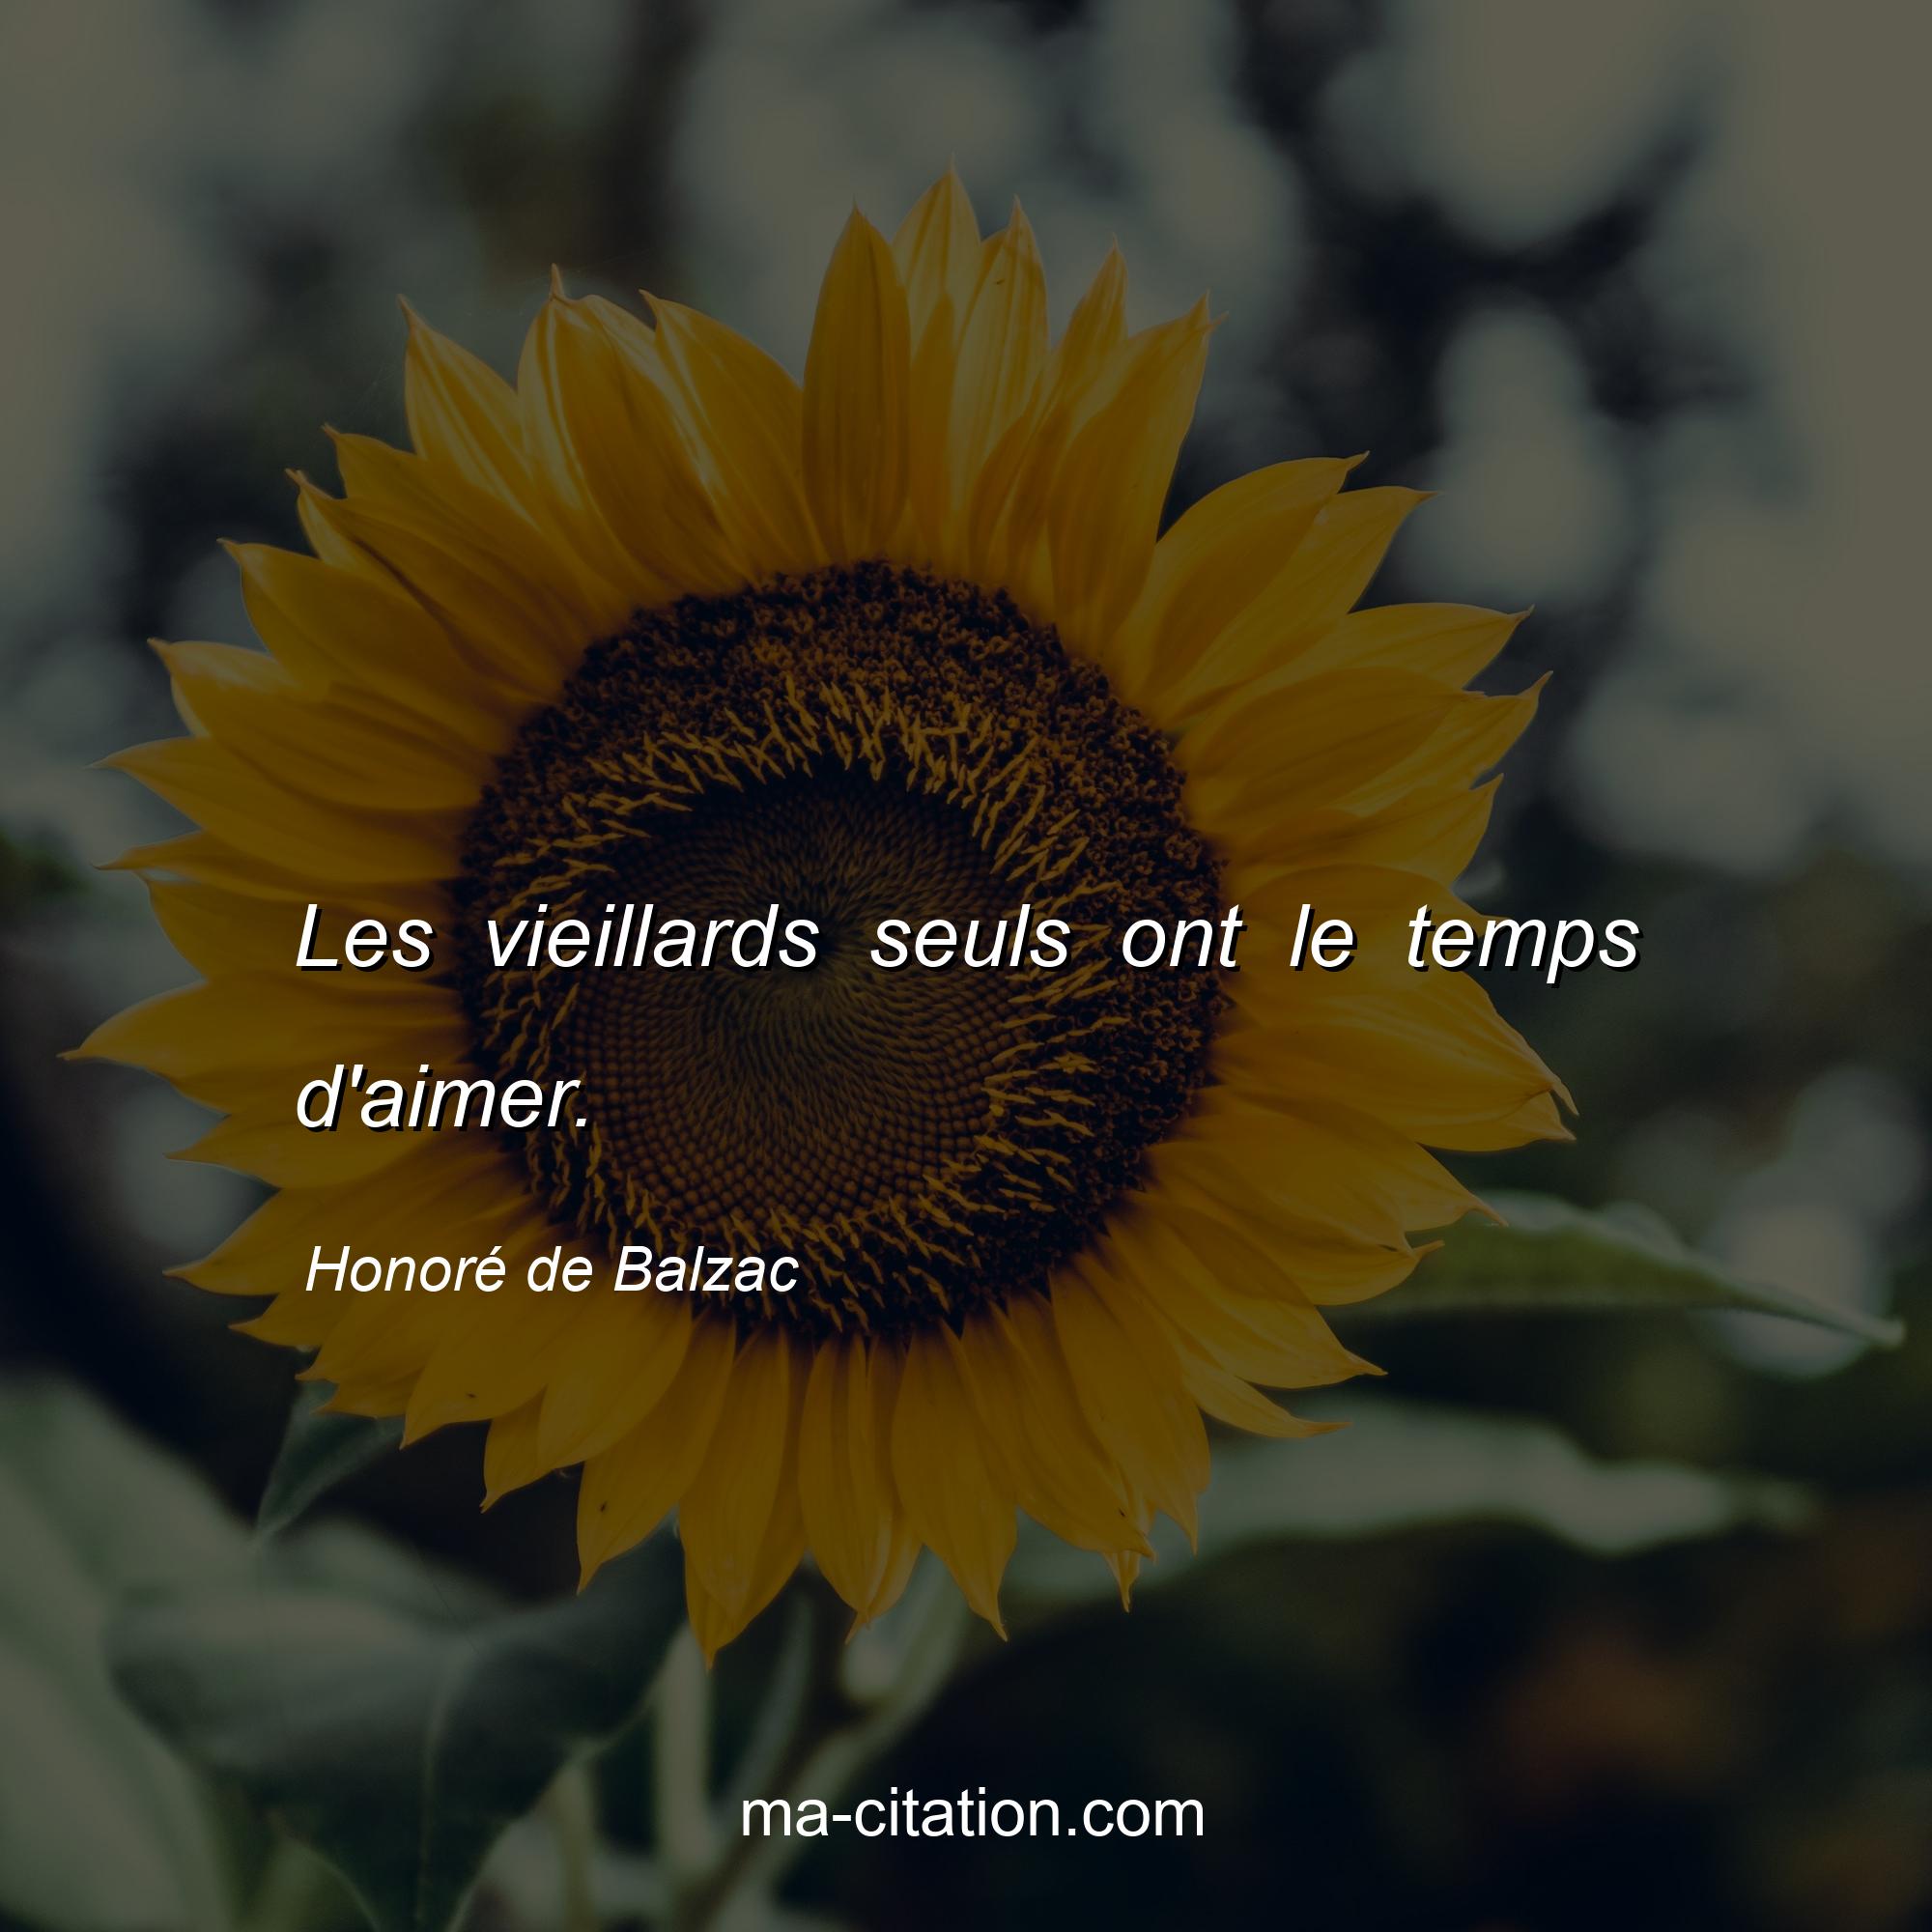 Honoré de Balzac : Les vieillards seuls ont le temps d'aimer.